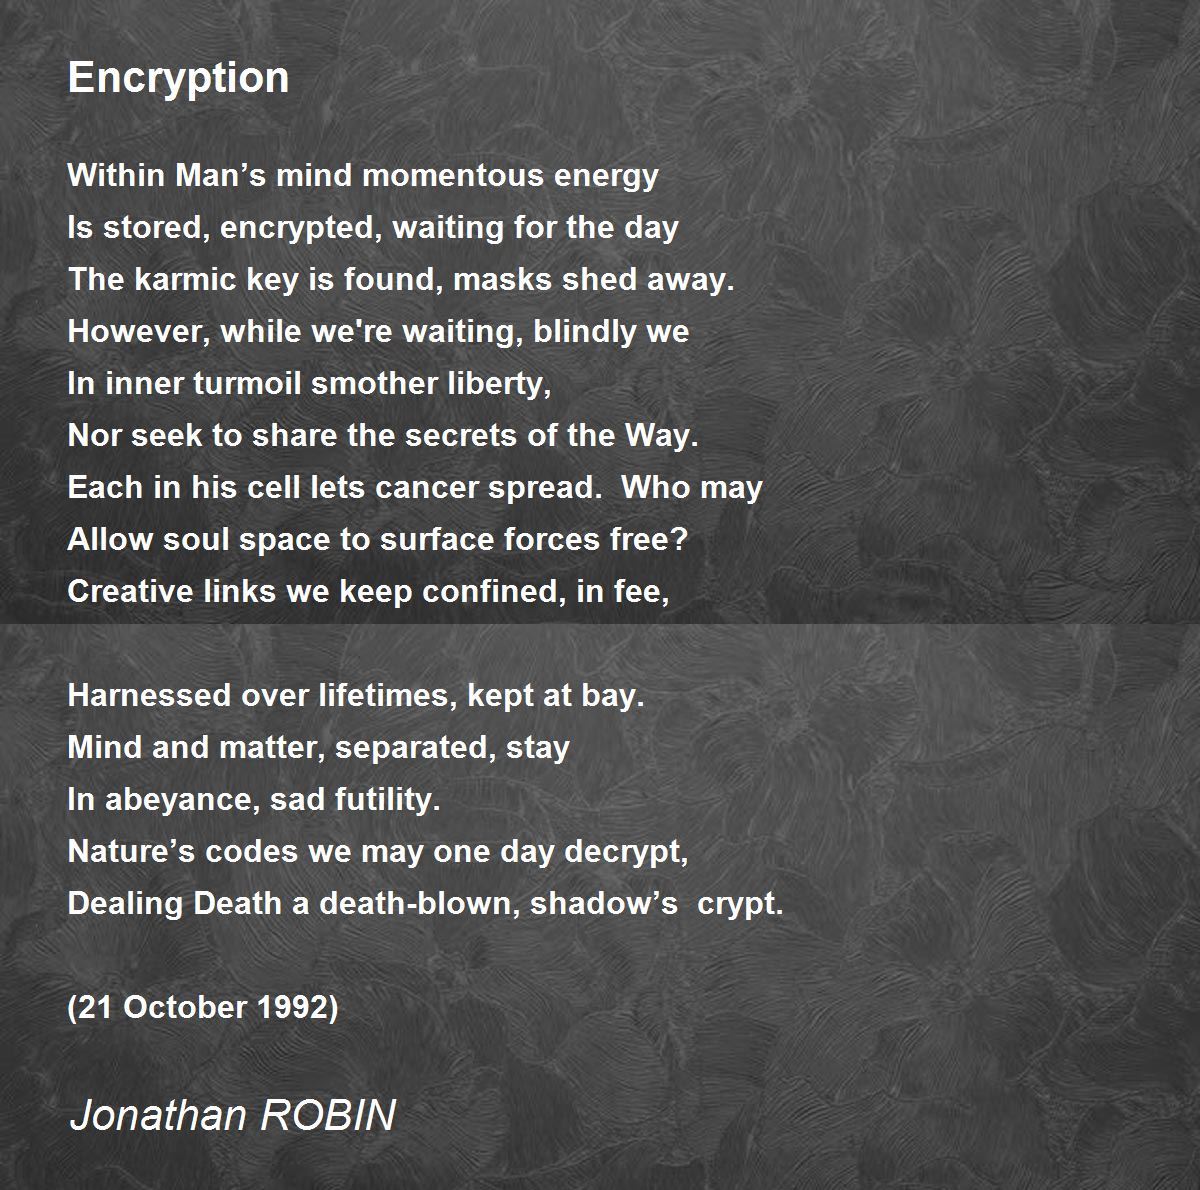 Encryption - Encryption Poem by Jonathan ROBIN